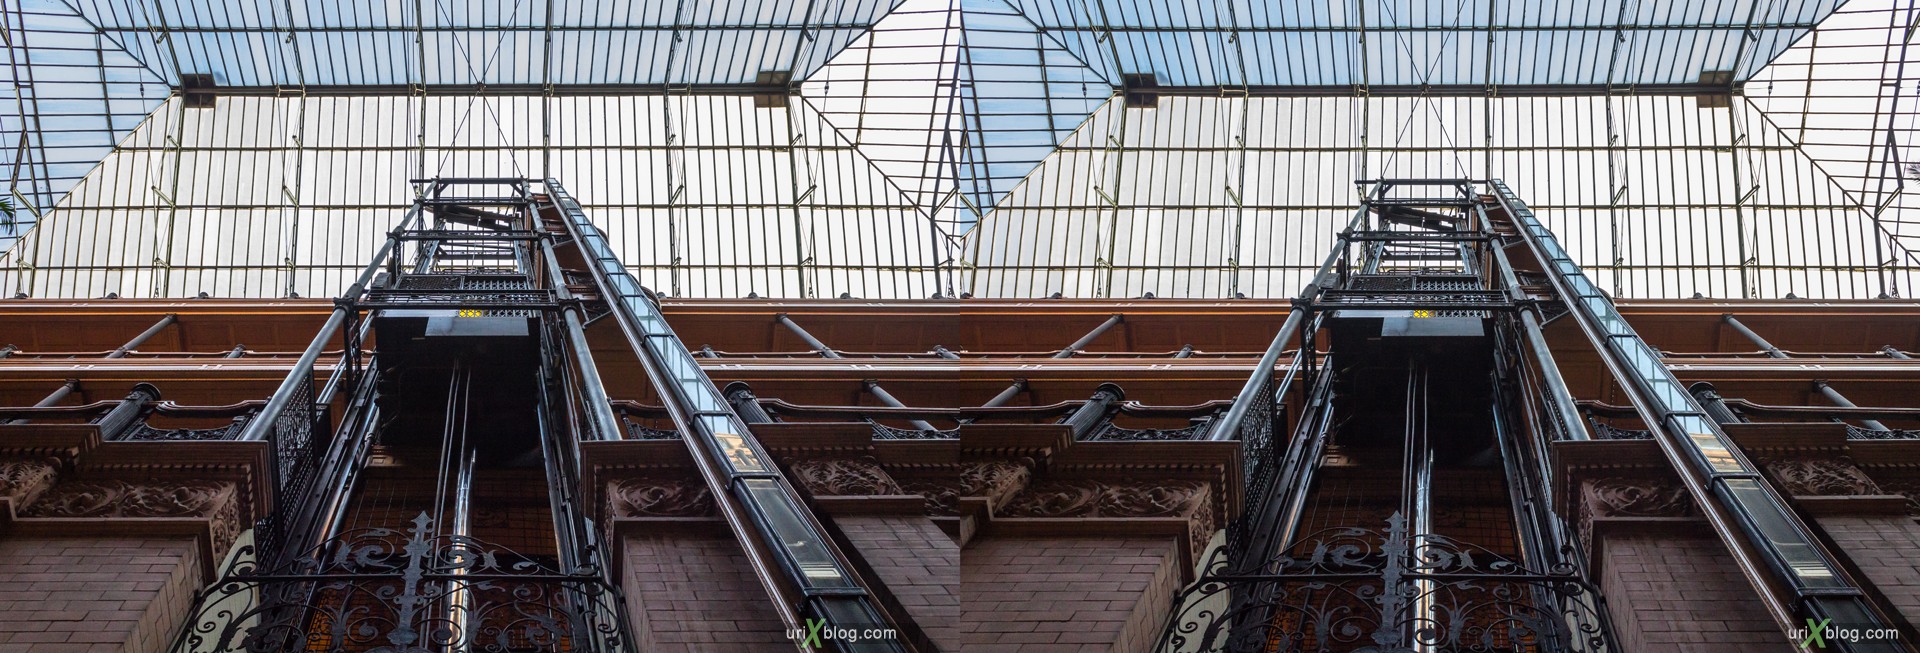 2013, USA, Bradbury Building, Los Angeles, California, 3D, stereo pair, cross-eyed, crossview, cross view stereo pair, stereoscopic